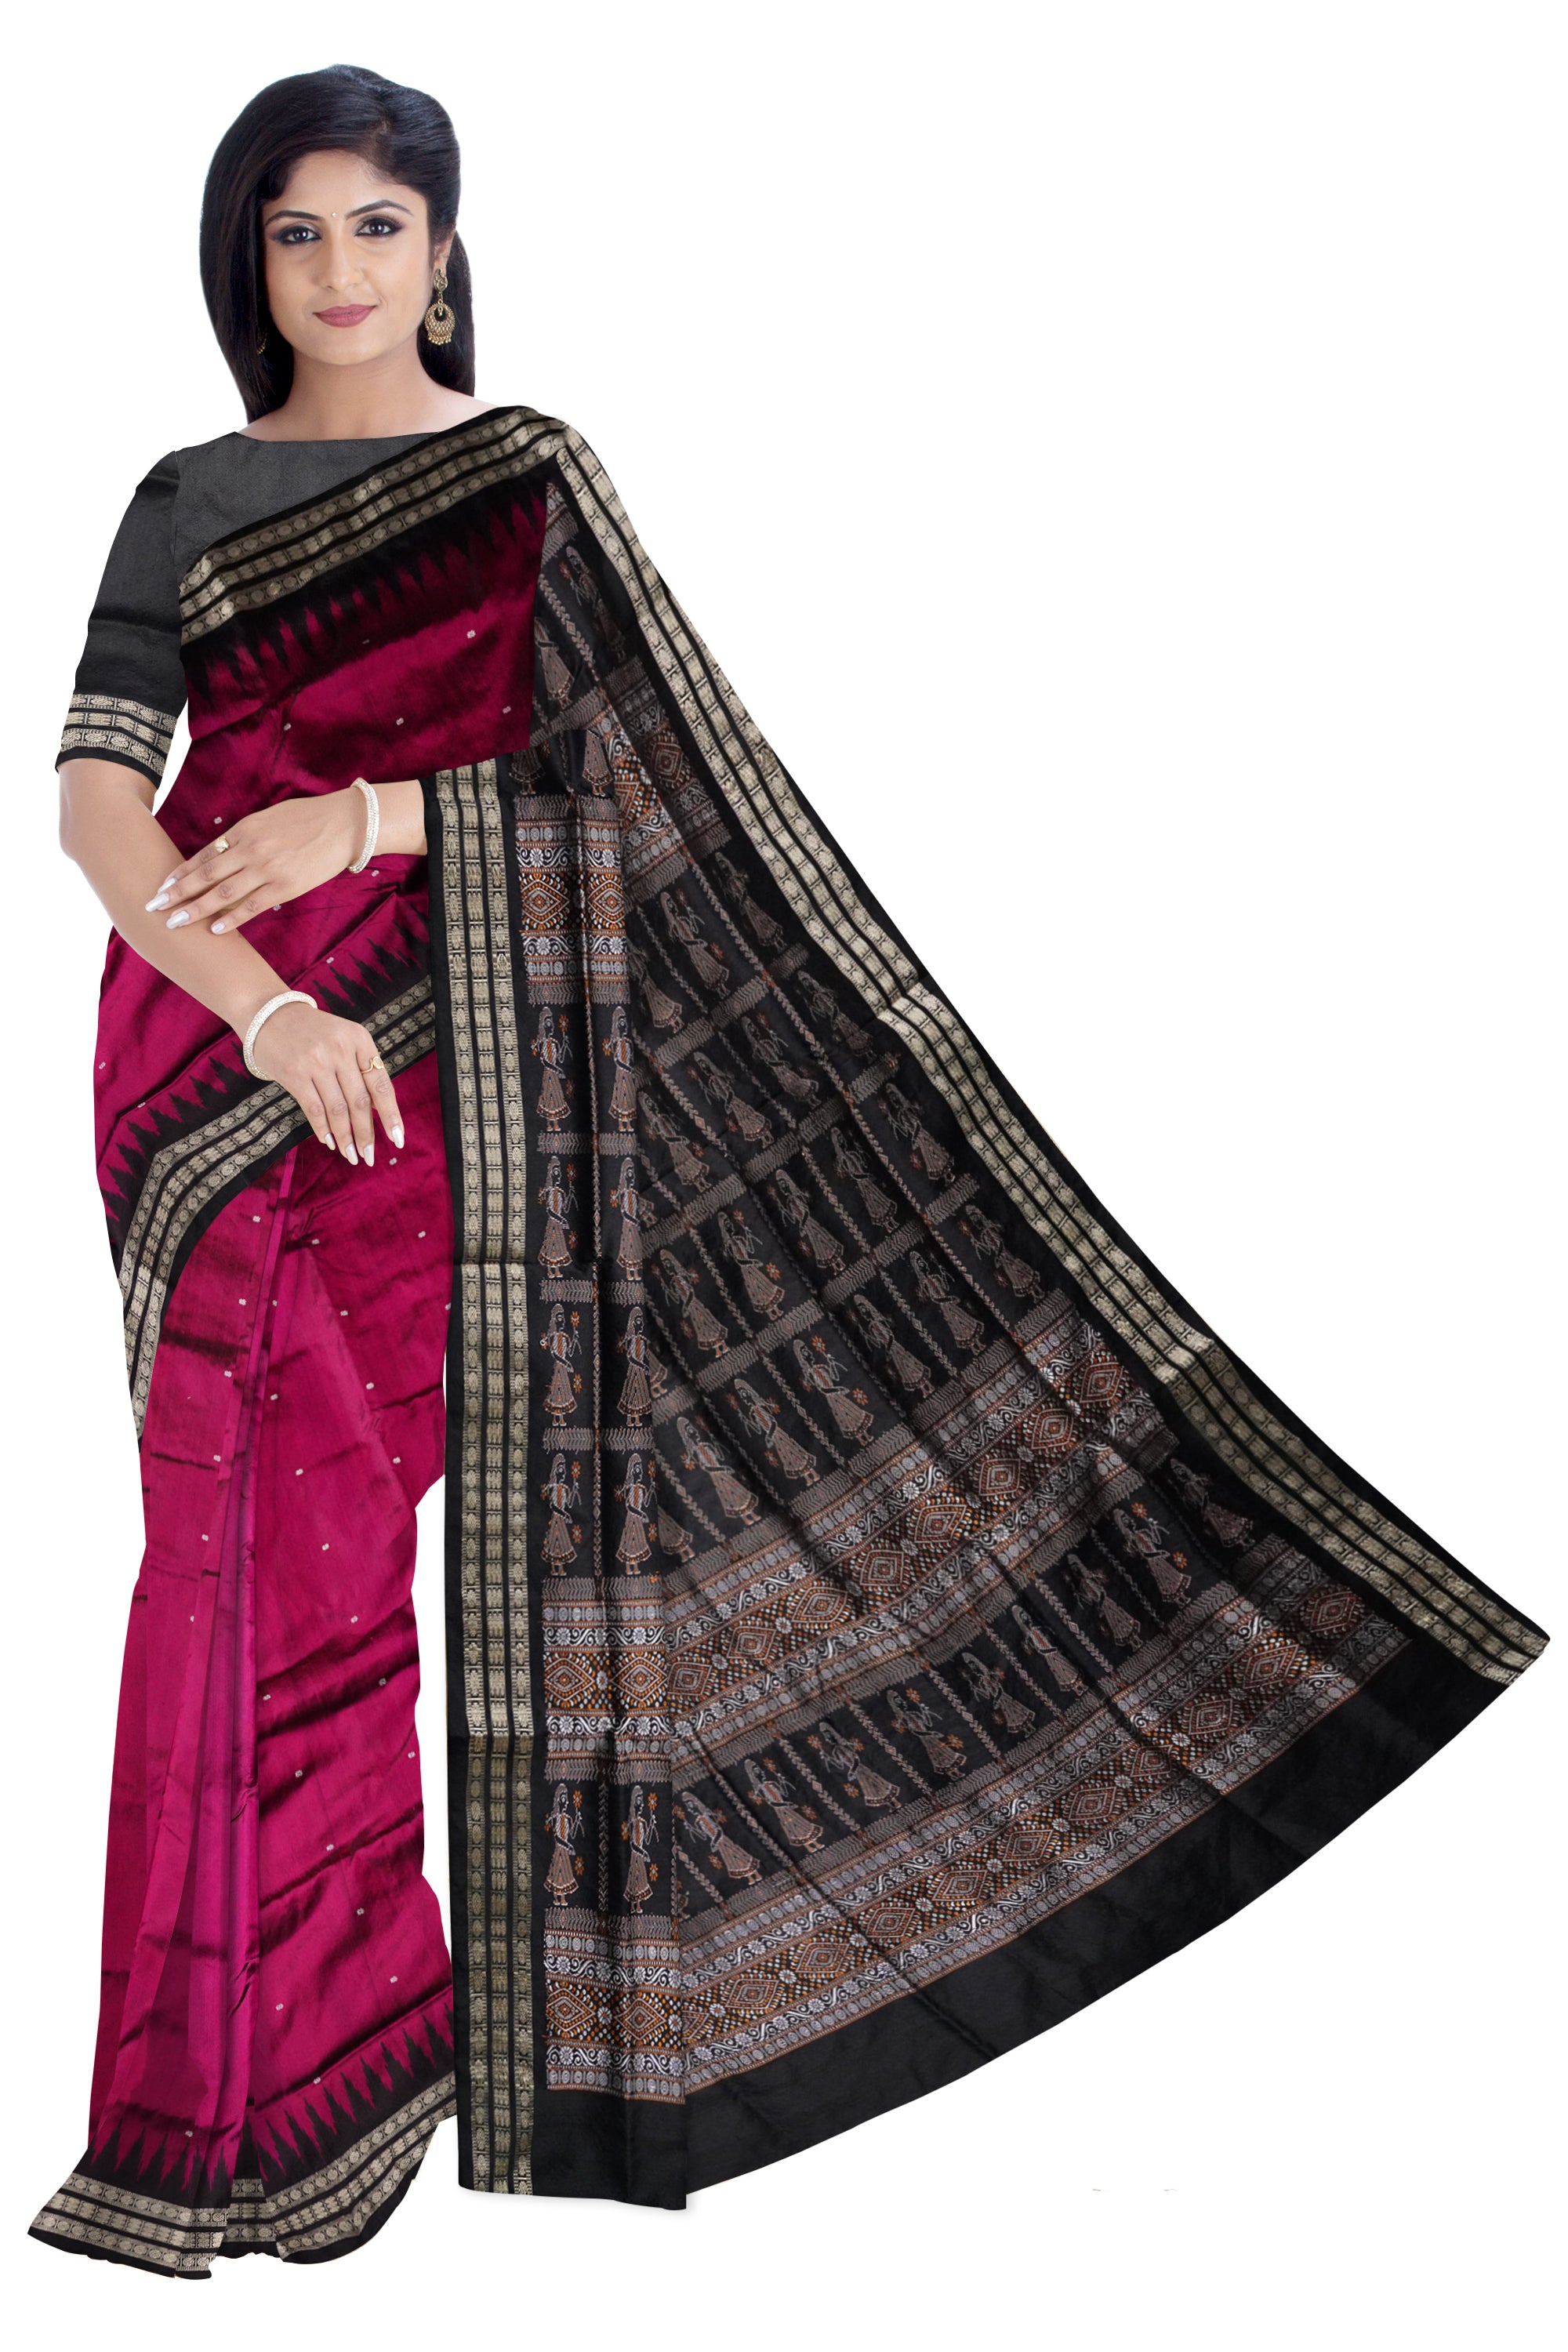 Pallu doll pattern plain pata saree is deep-pink and black color base. - Koshali Arts & Crafts Enterprise